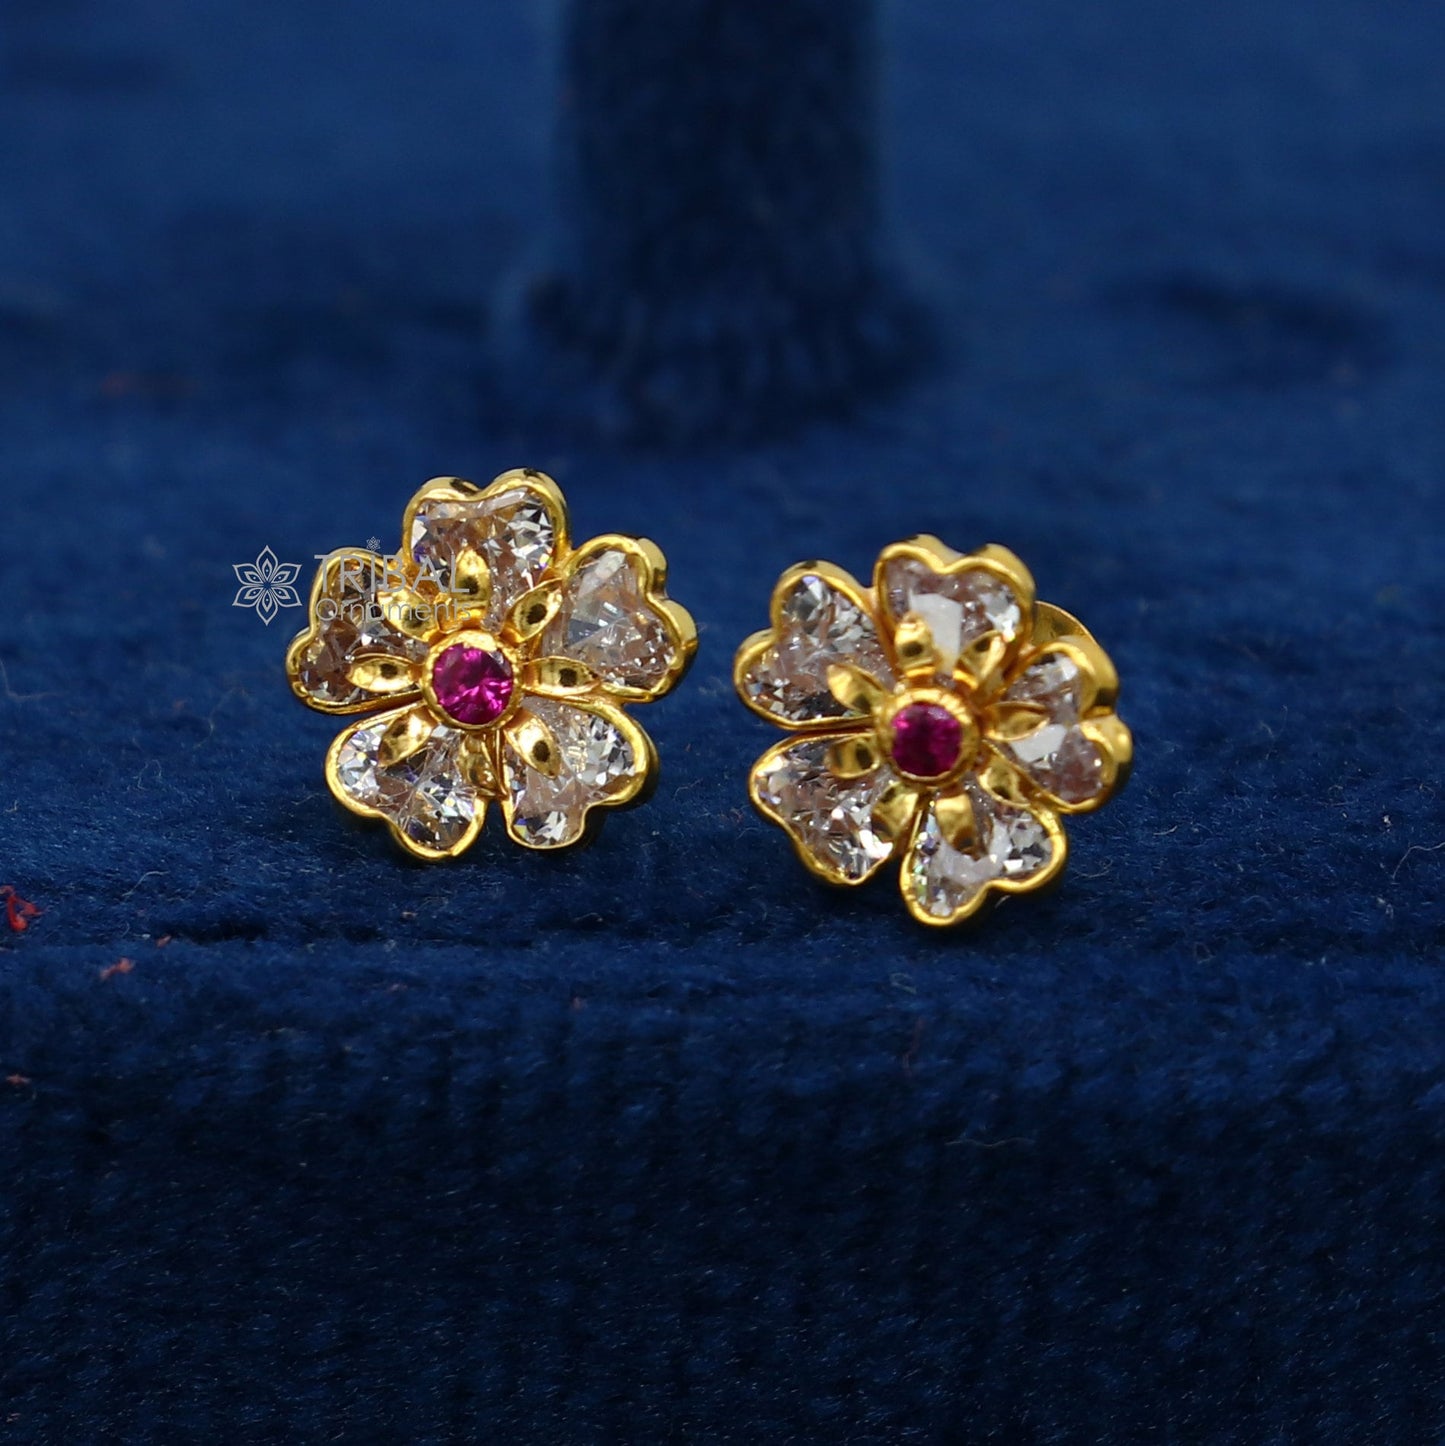 14kt yellow gold handmade fabulous orange Stone excellent vintage flower design stud earrings pair unisex jewelry er178 - TRIBAL ORNAMENTS